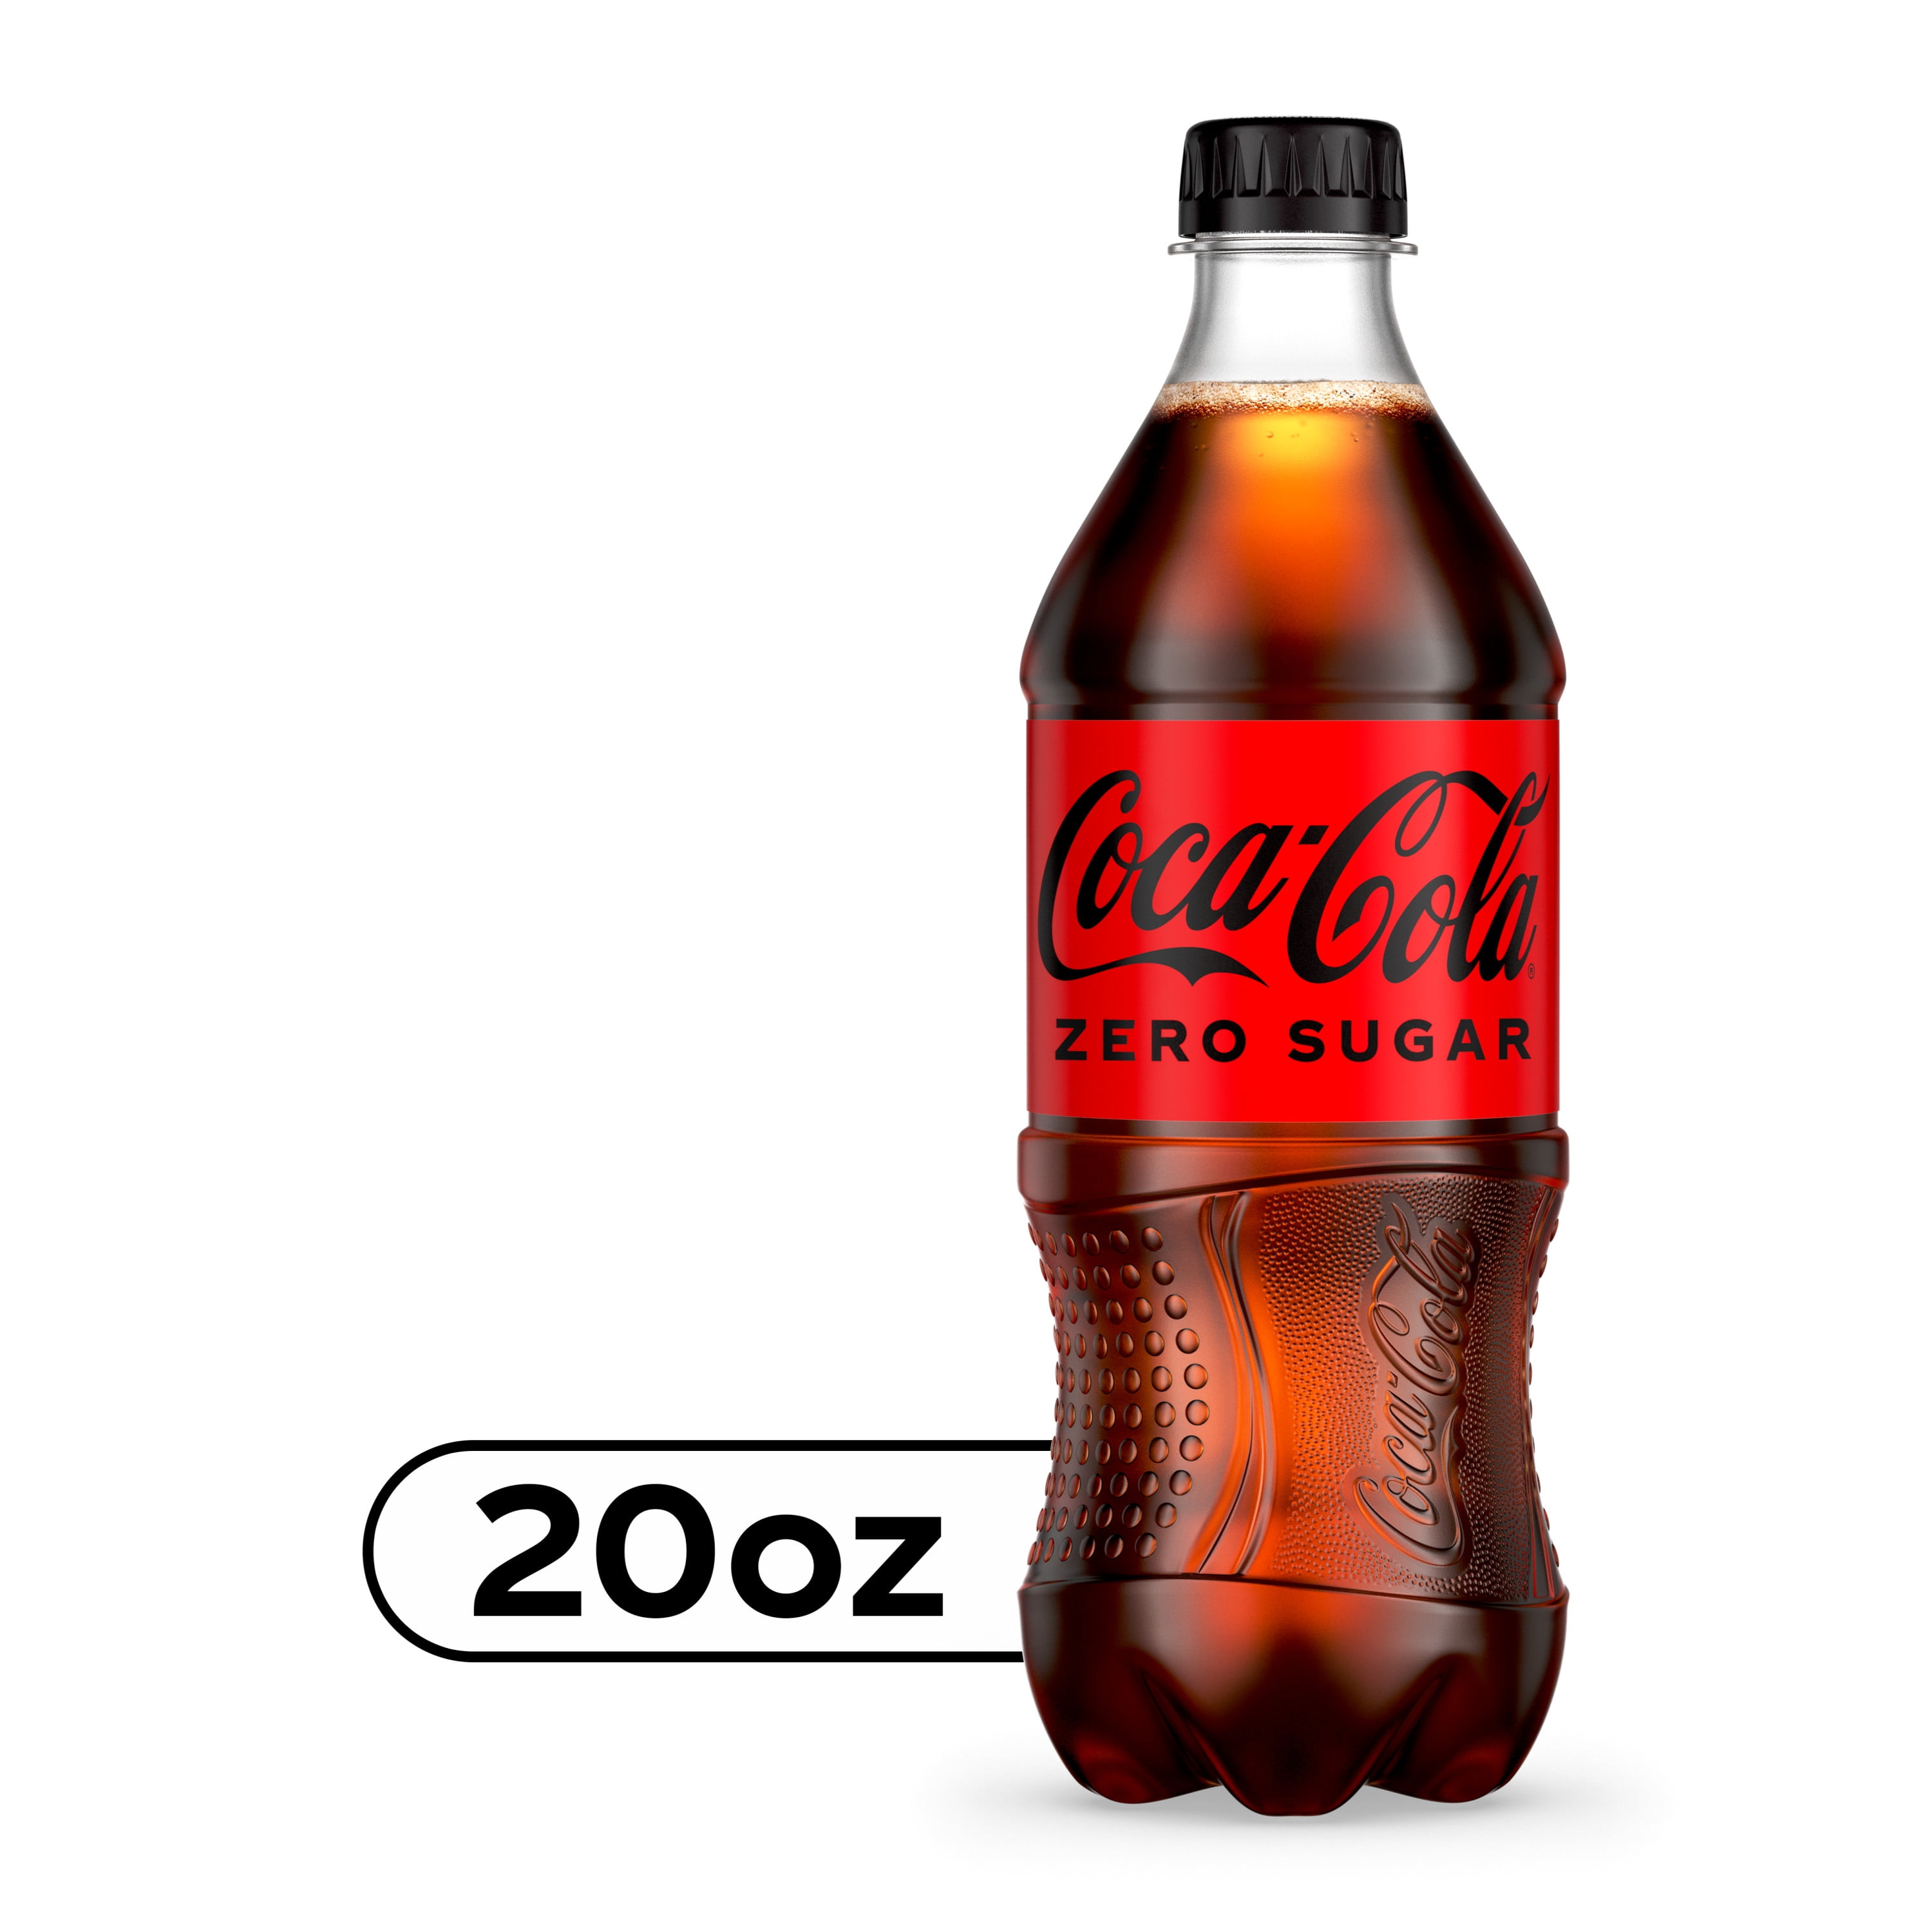 Coca-Cola Zero Sugar Soda Pop, 20 fl oz Bottle